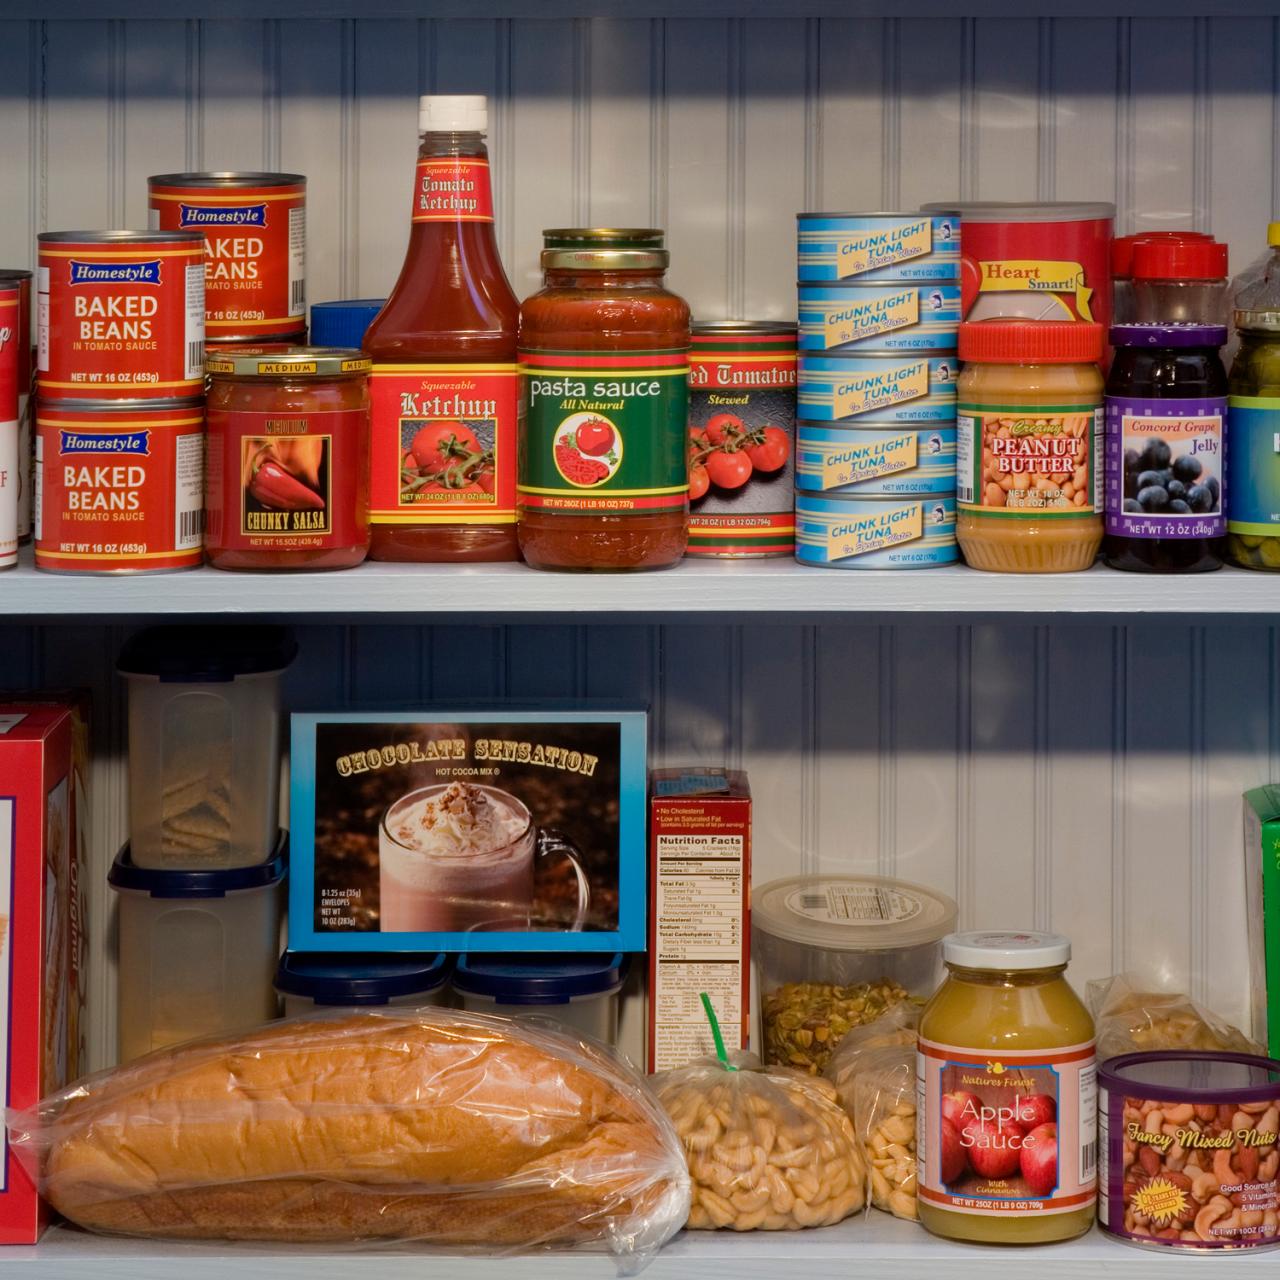 How to Make an Emergency Preparedness Kit - Food for Emergency Kit